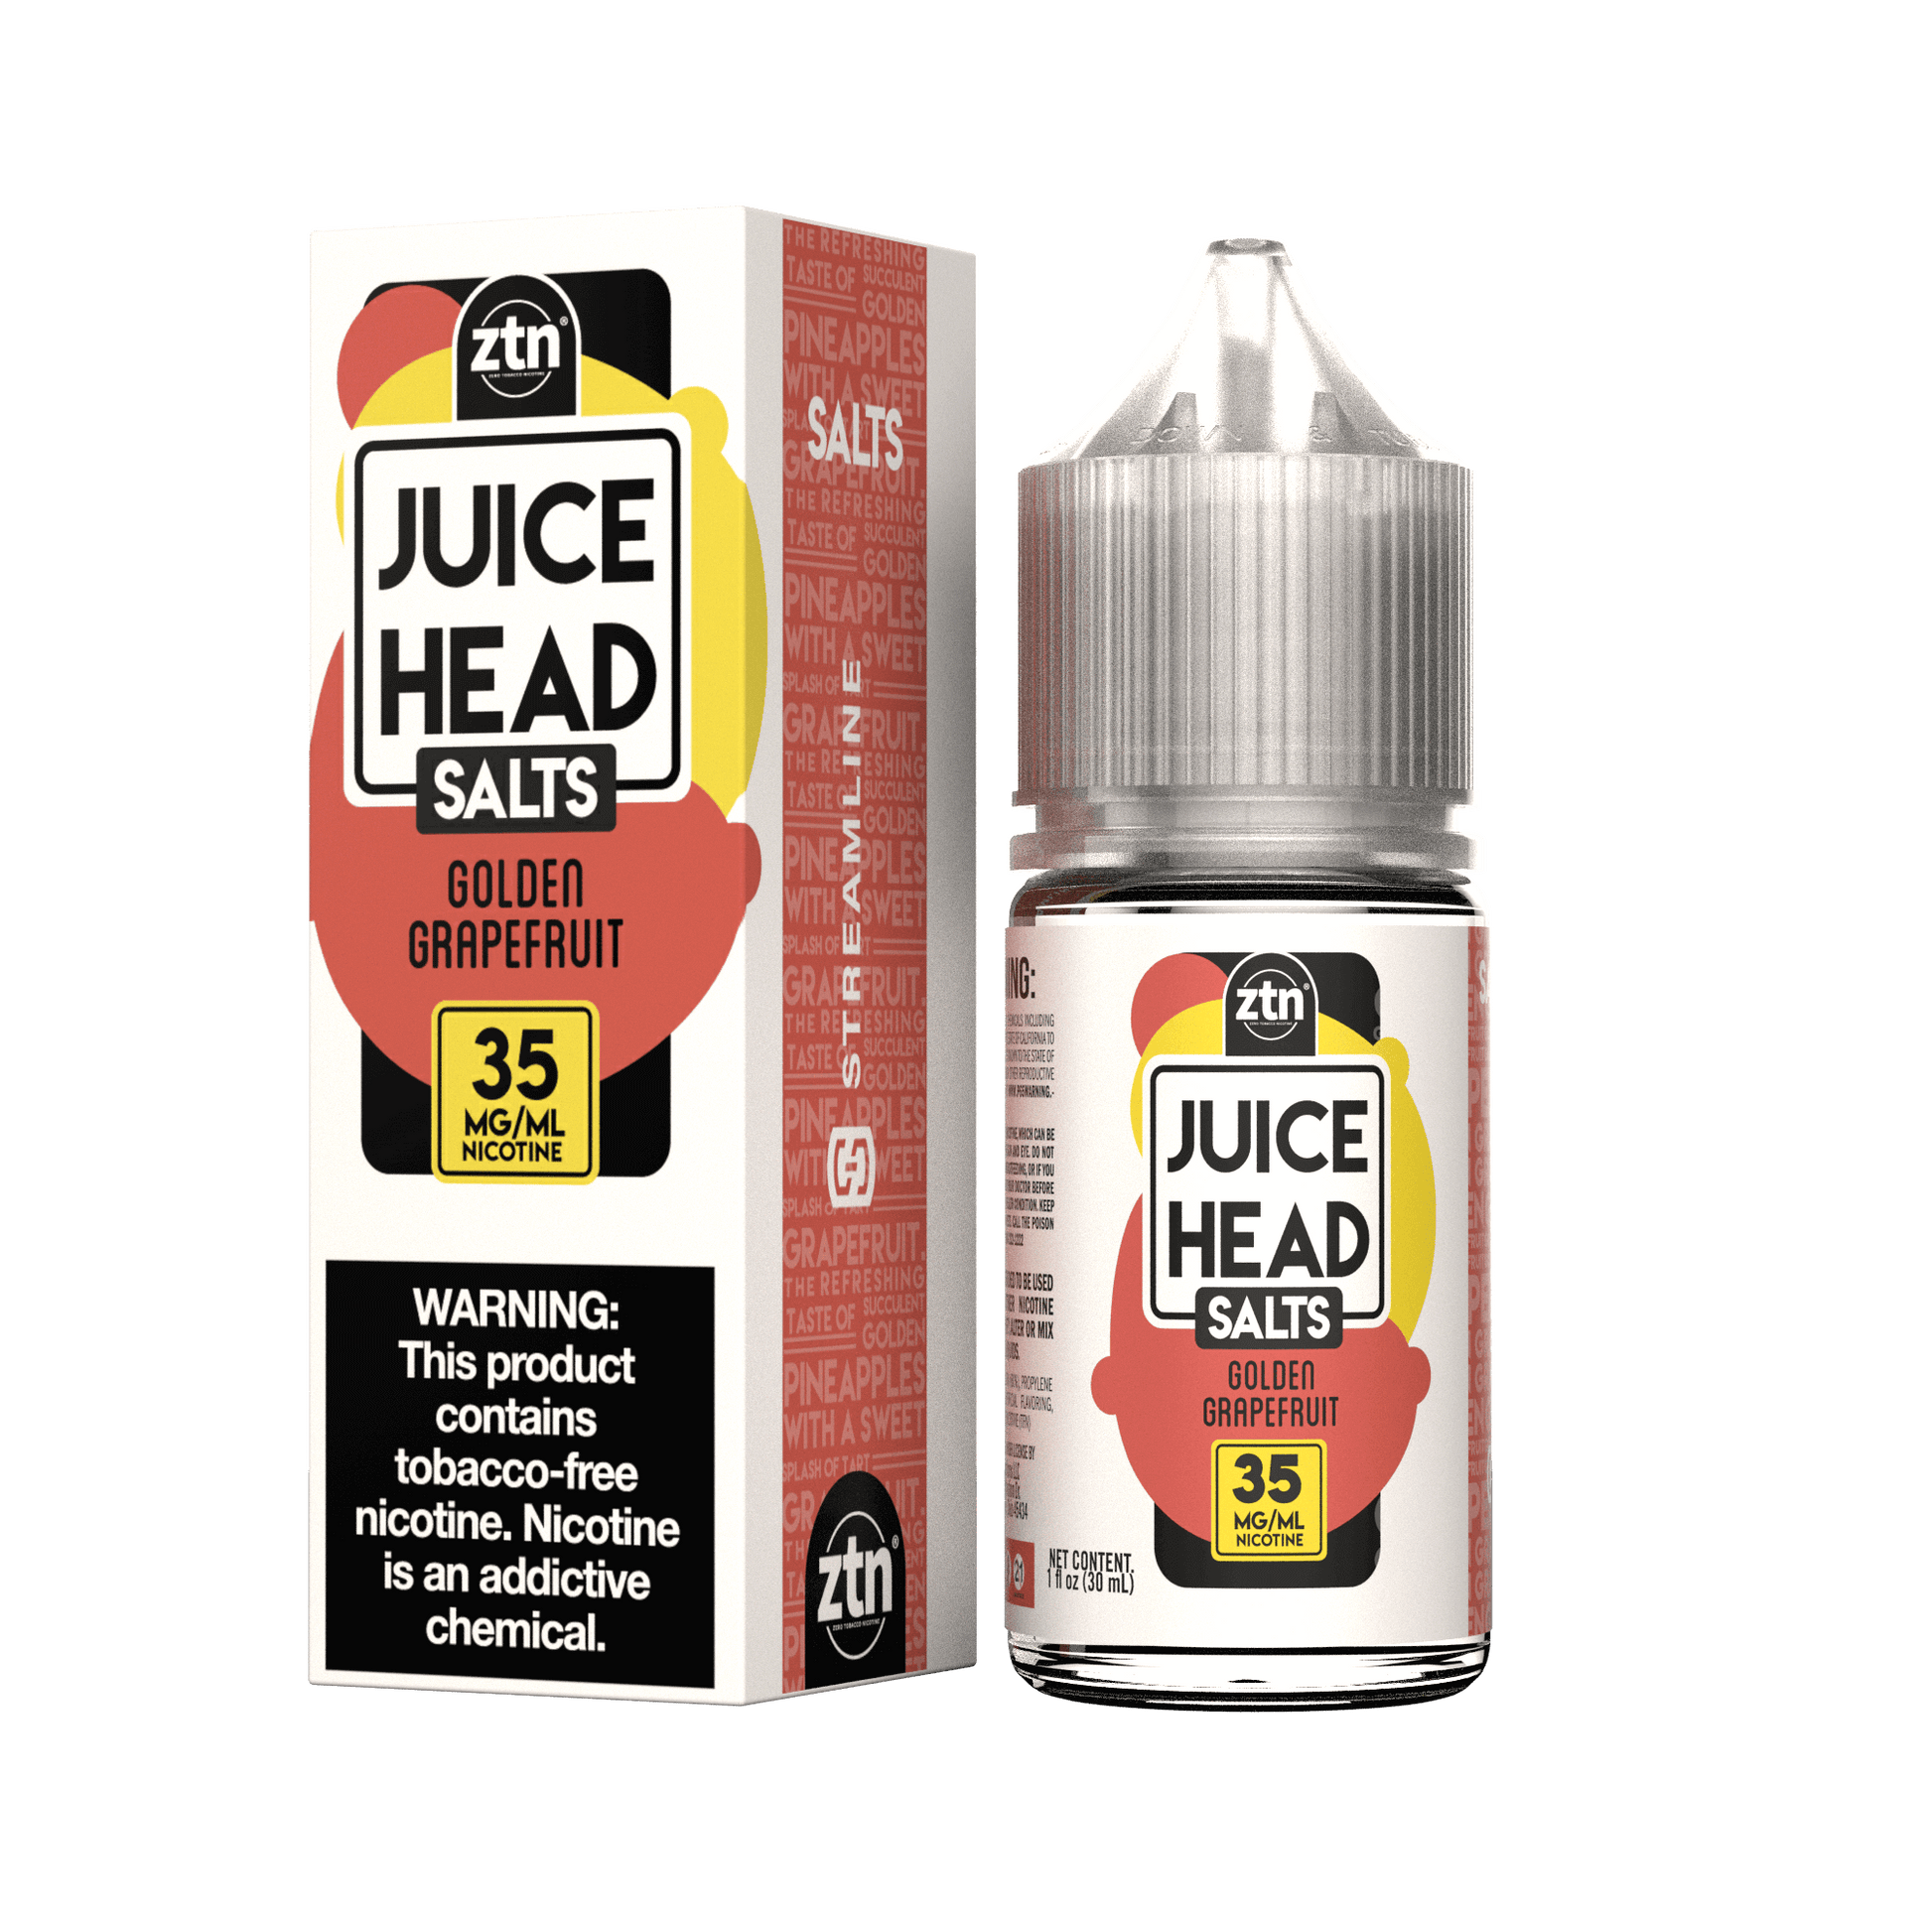 Juice Head Salt Series E-Liquid 30mL (Salt Nic)| Golden Grapefruit with packaging